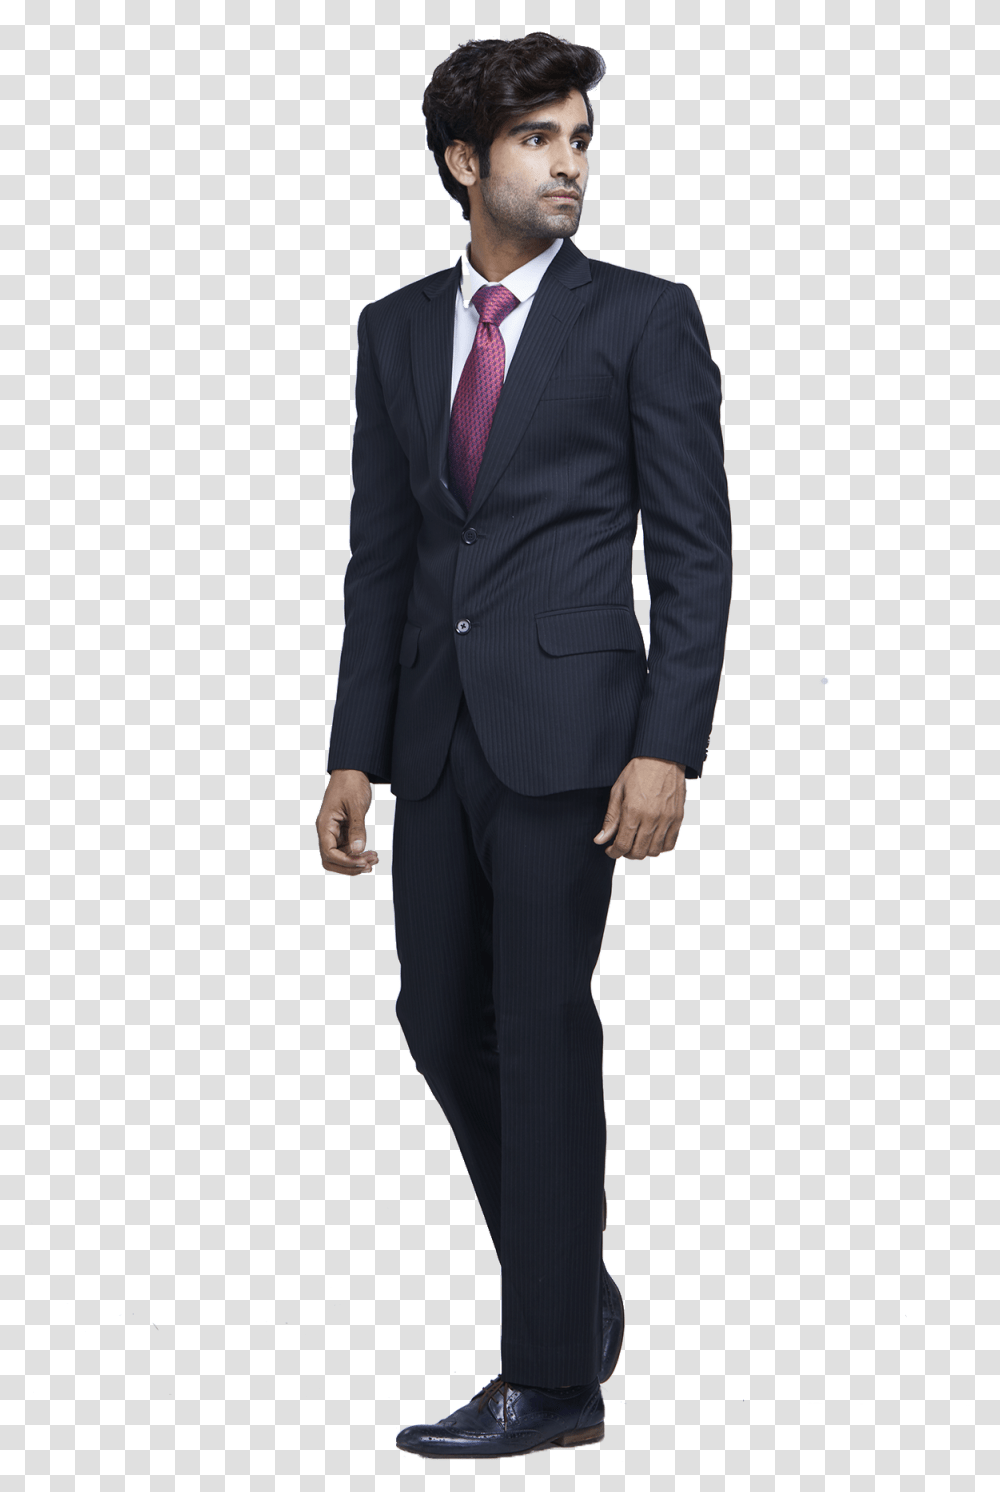 Black Formal Striped Suit Black Bow Tie Suit, Overcoat, Person, Man Transparent Png